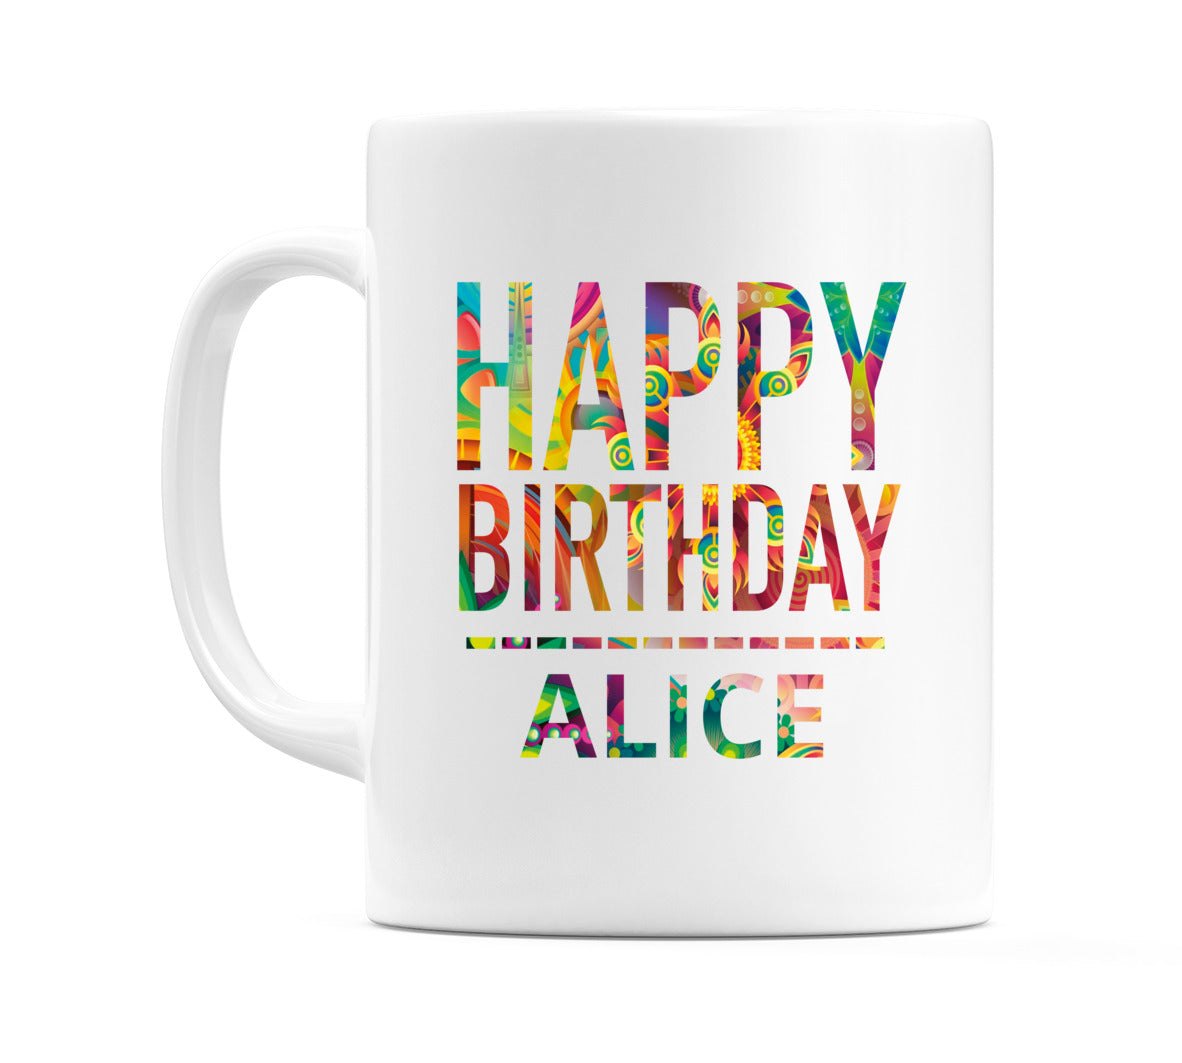 Happy Birthday Alice (Tie Dye Effect) Mug Cup by WeDoMugs